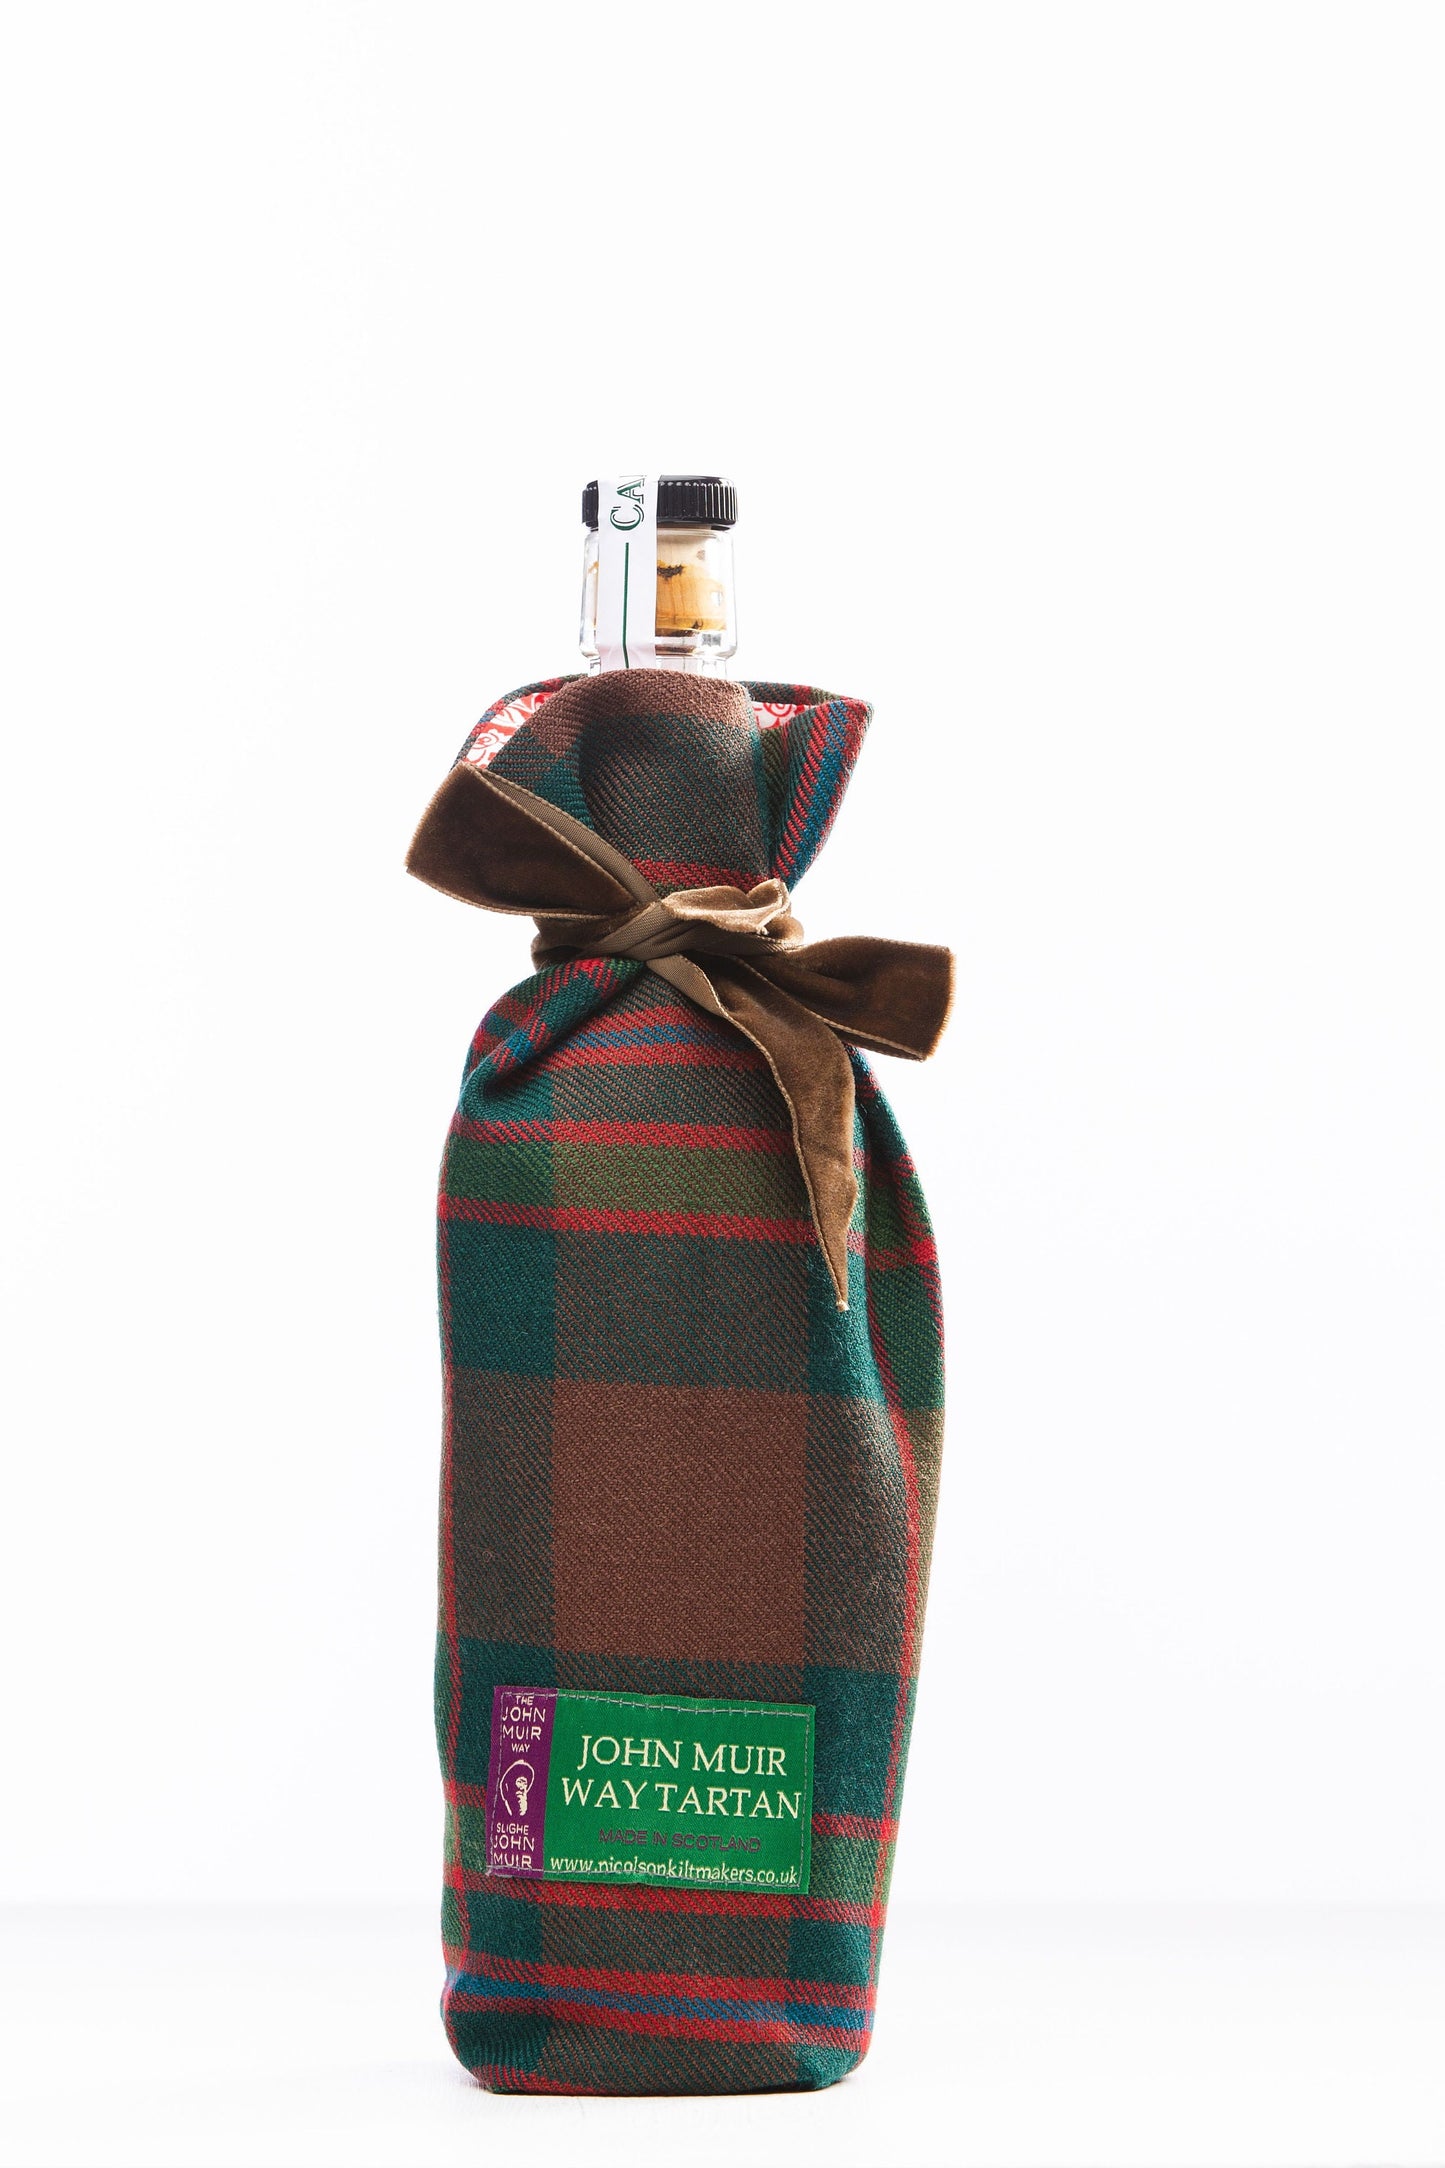 Bolsa de botella escocesa de lujo John Muir Way Tartan hecha con forro de tela Liberty